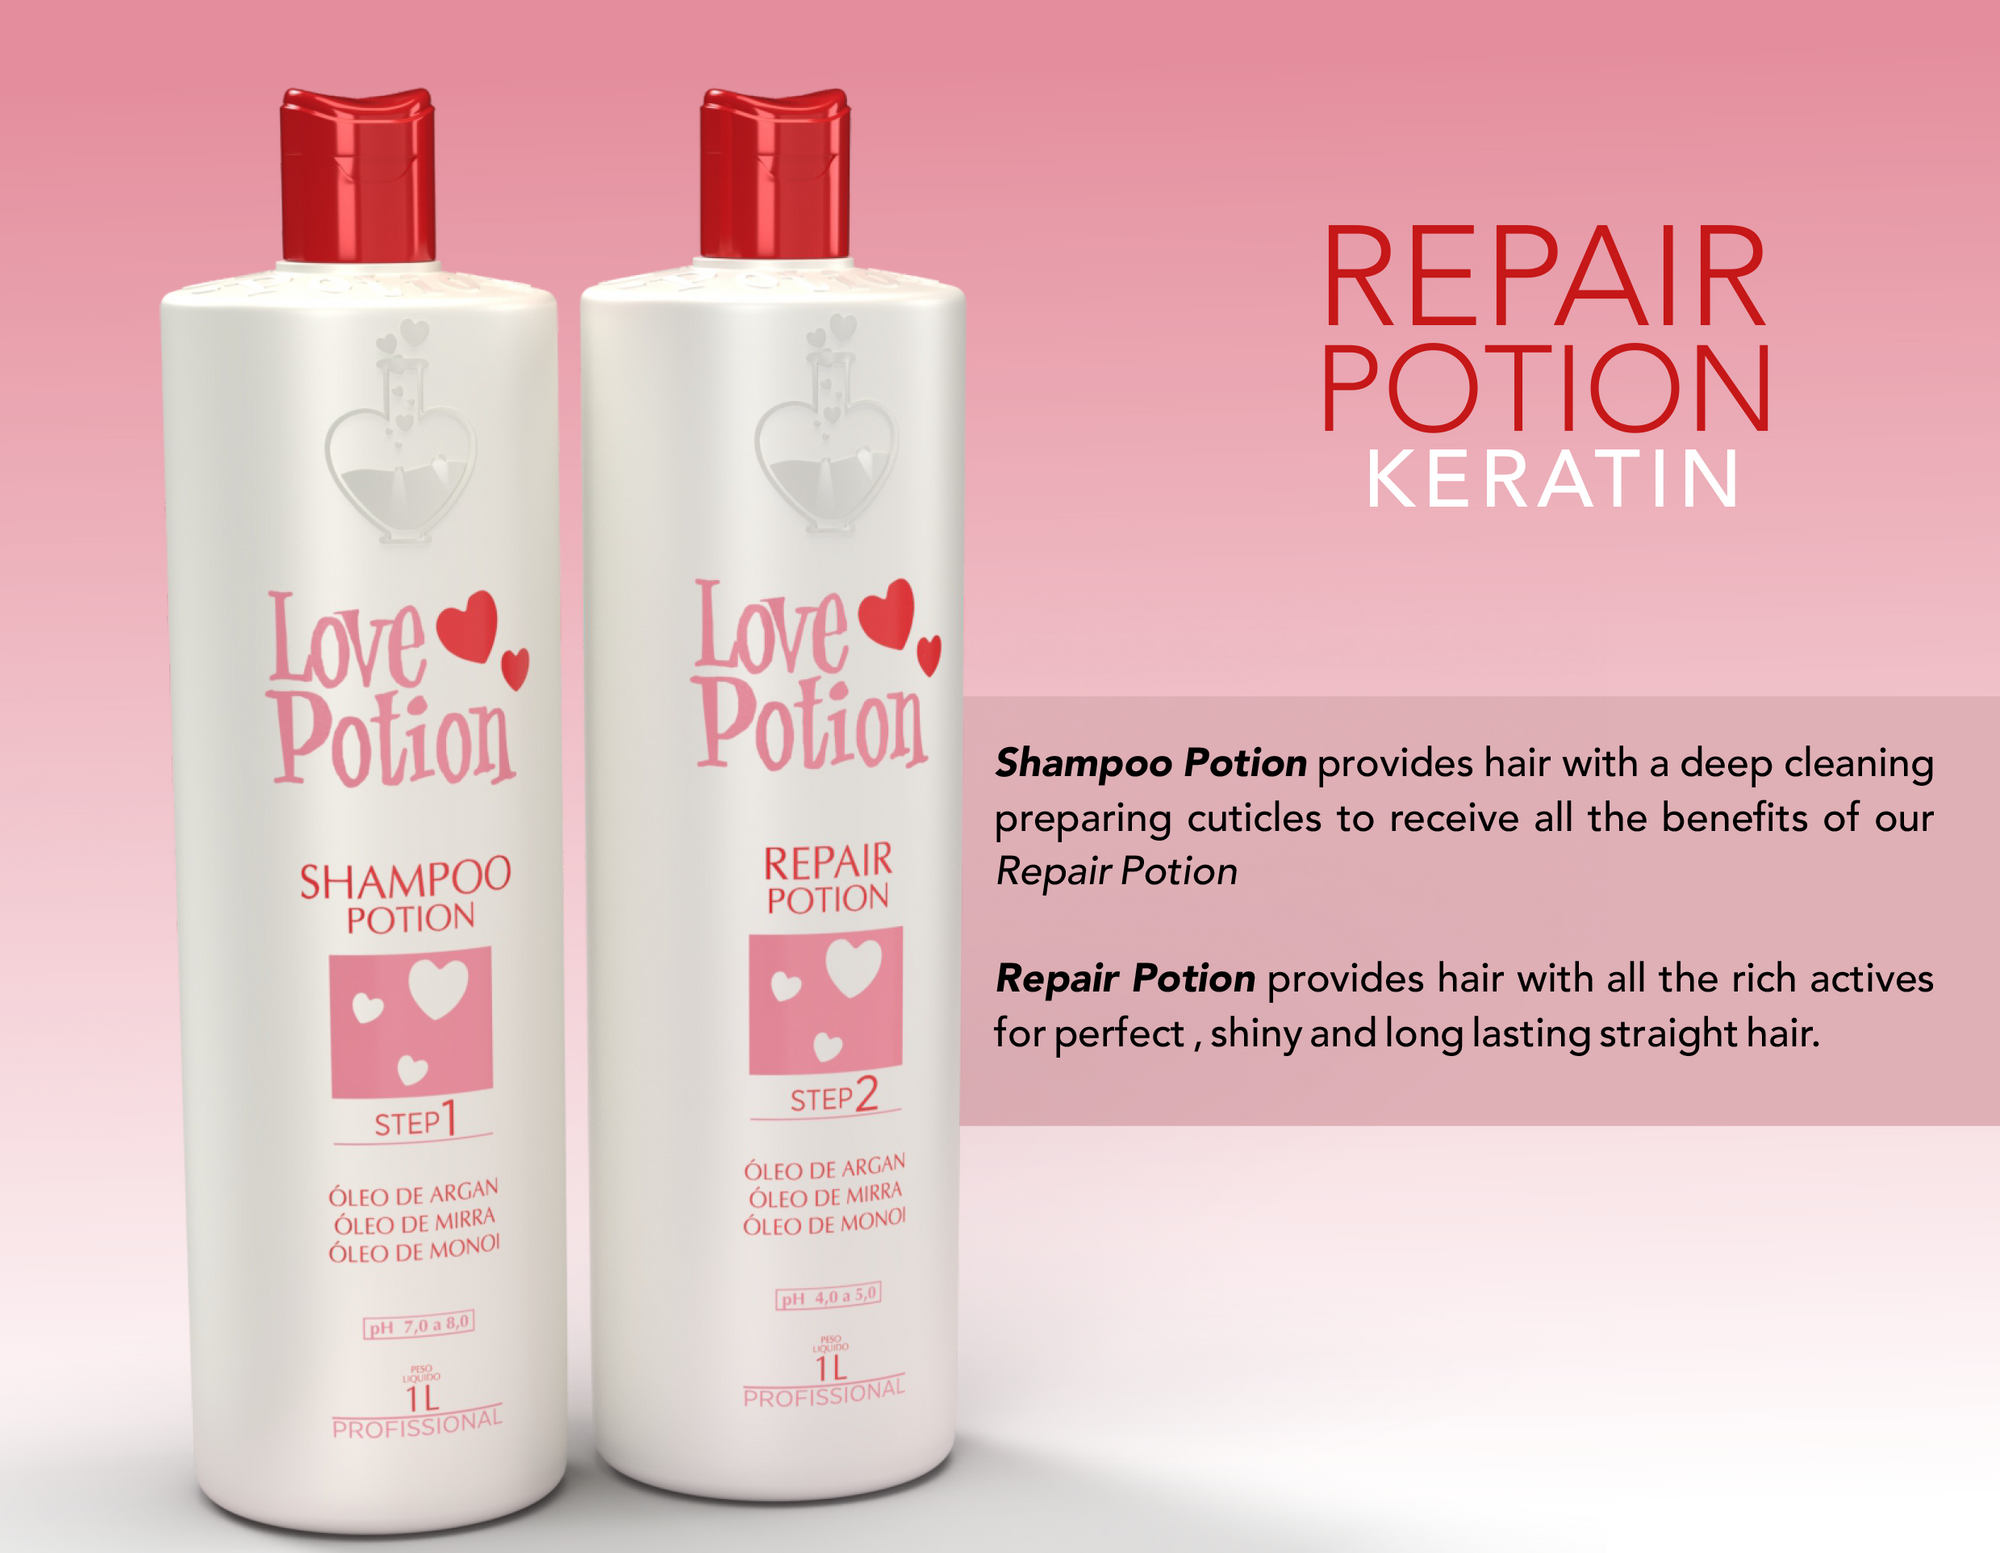 Brazilian Keratin Love Potion Repair Kit (Includes Shampoo + Repair Formula)